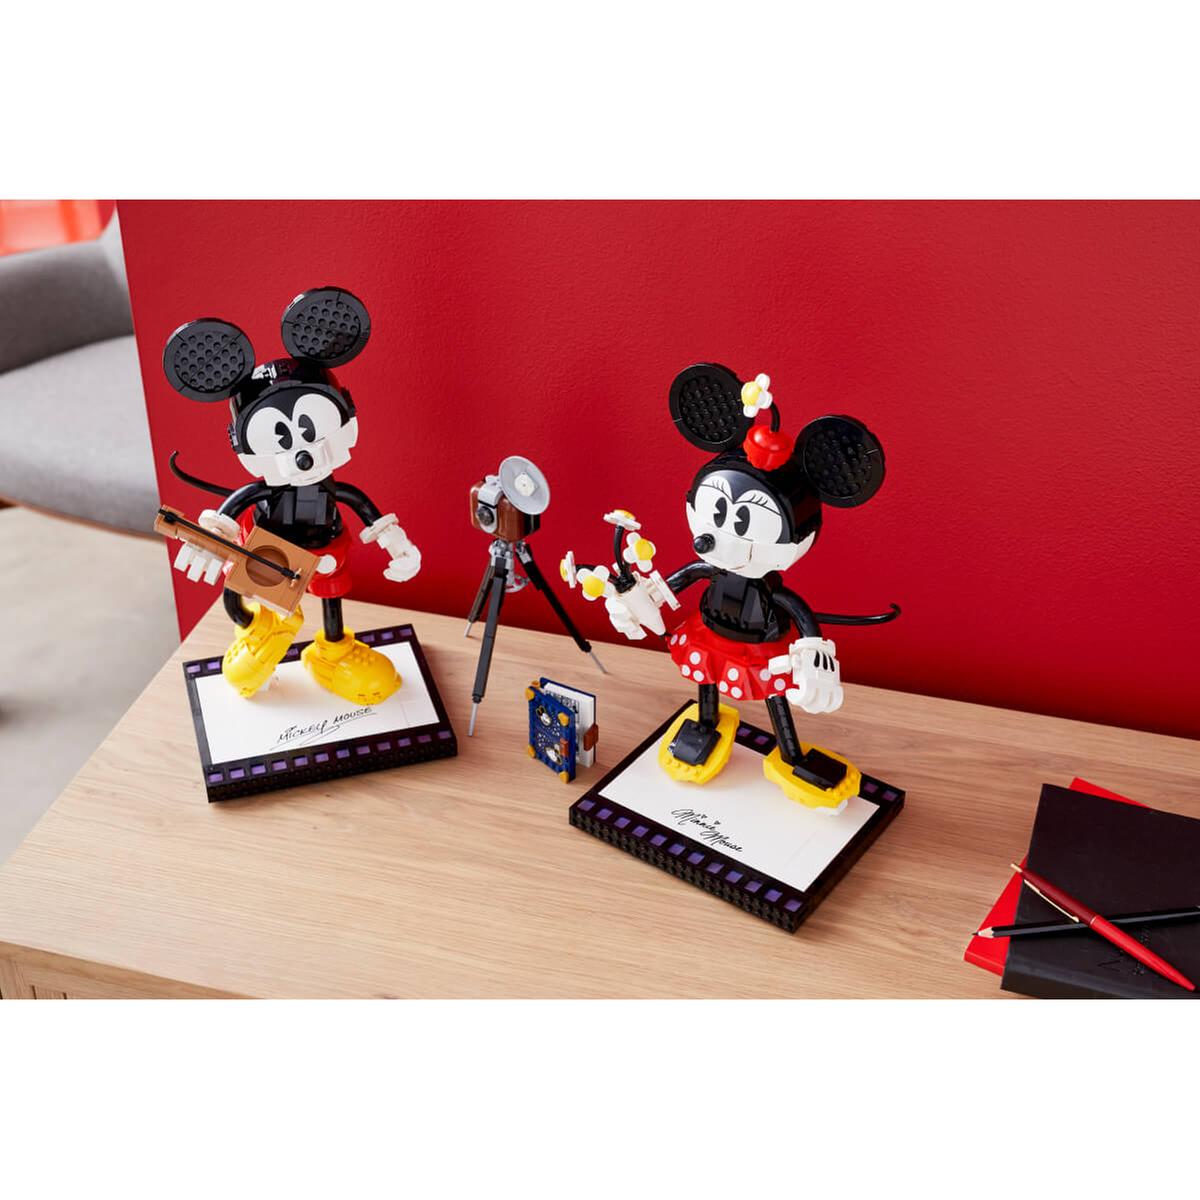 LEGO Disney Princess - Personajes construibles: Mickey Mouse y Minnie Mouse  - 43179 | Lego Otras Lineas | Toys"R"Us España